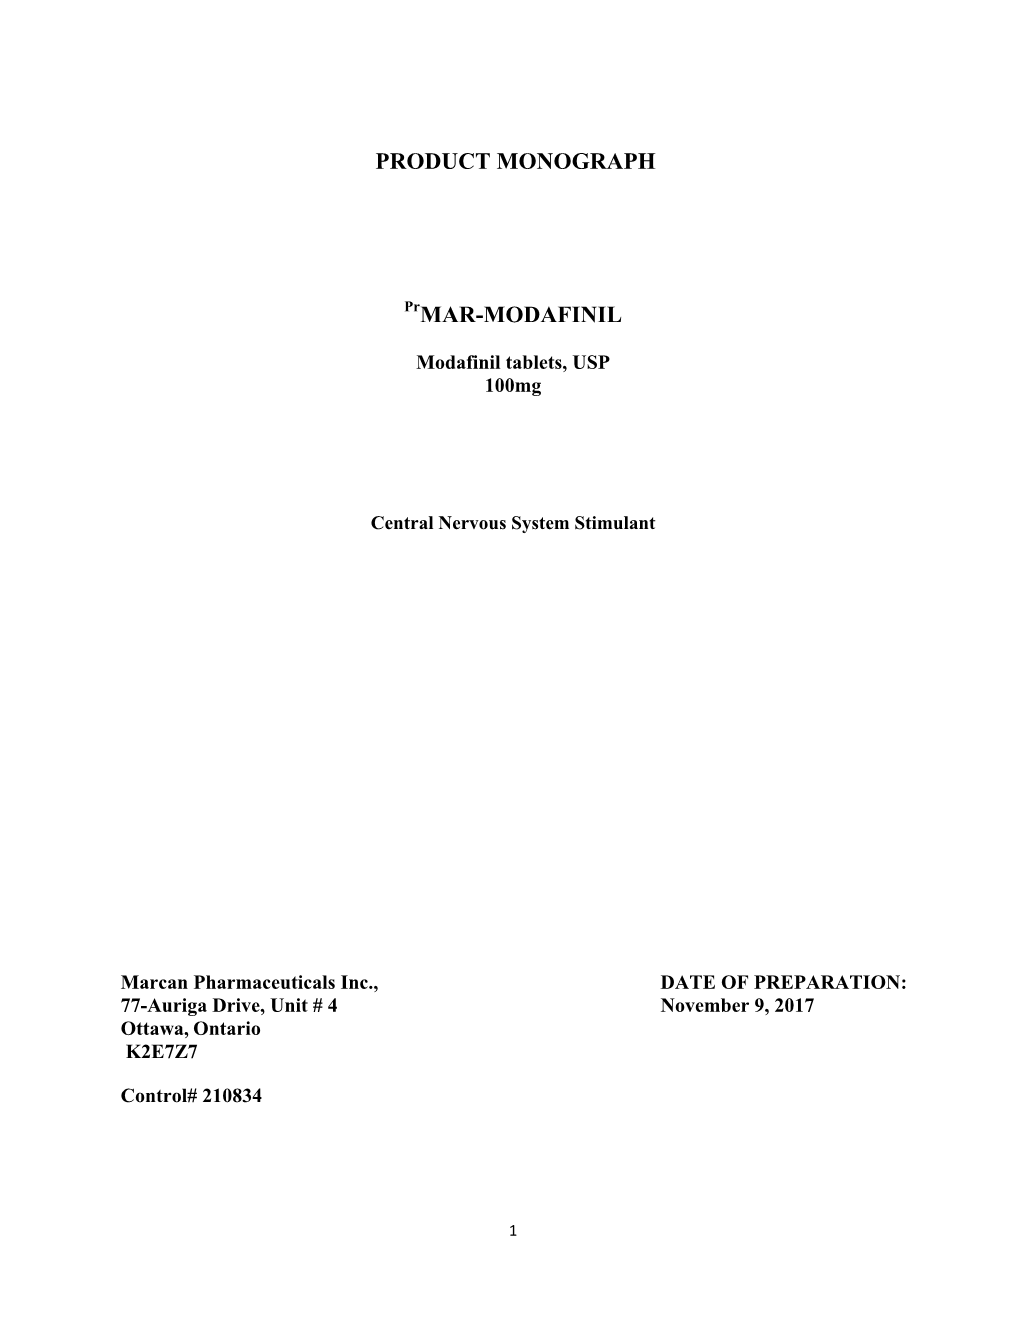 Product Monograph Mar-Modafinil